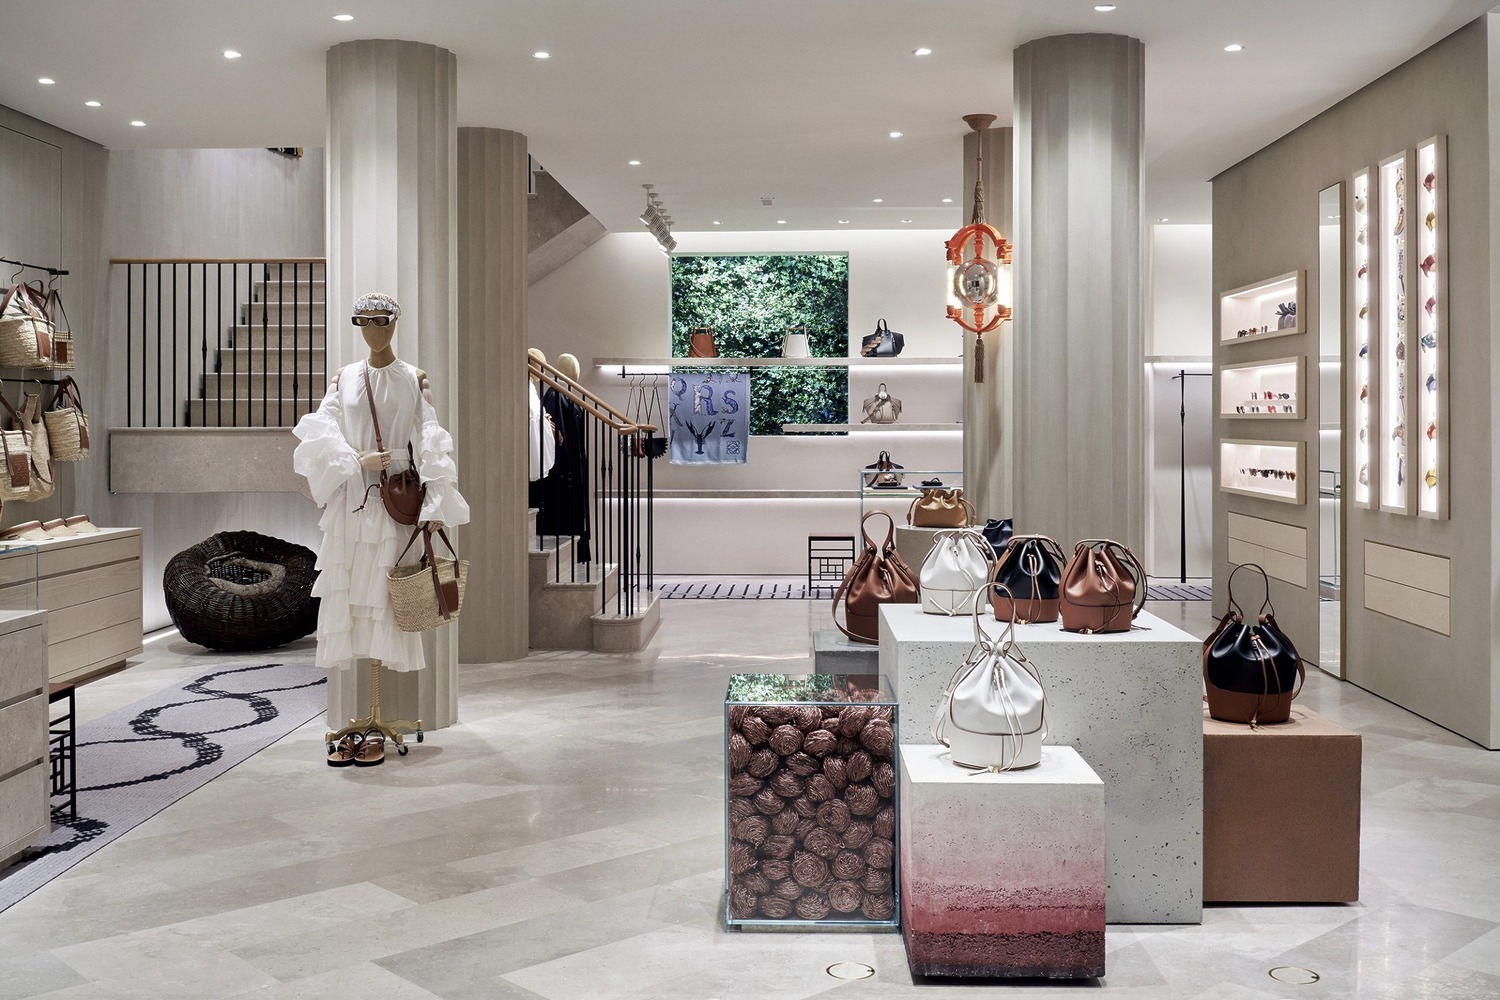 Louis Vuitton - Boutique in Munich